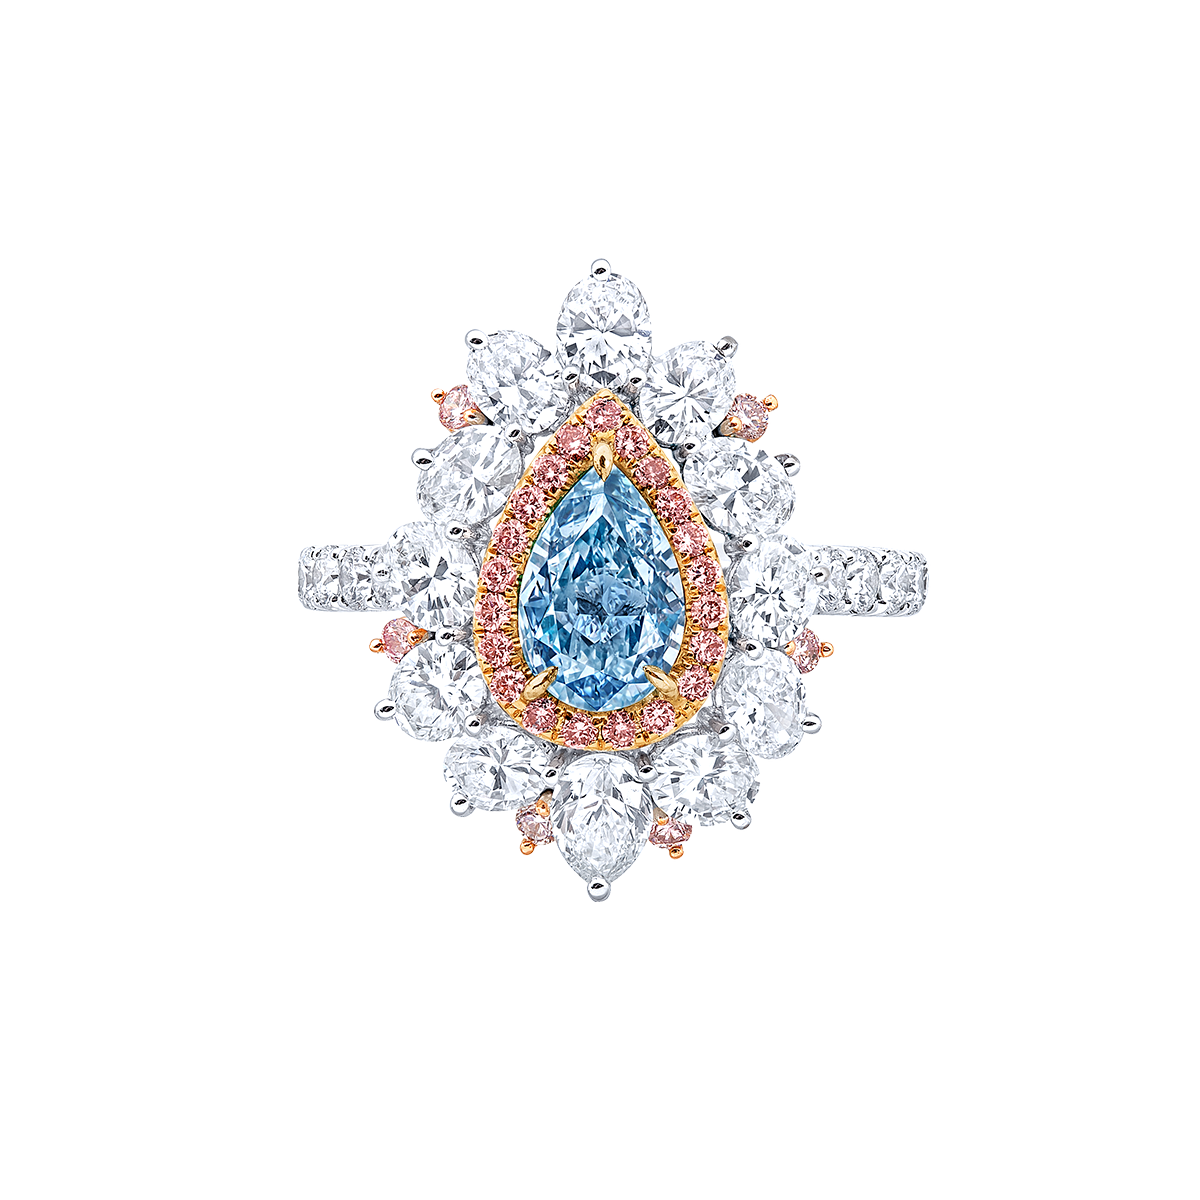 GIA 1.00克拉 藍鑽鑽戒
Very Light Blue Colored Diamond
and Diamond Ring